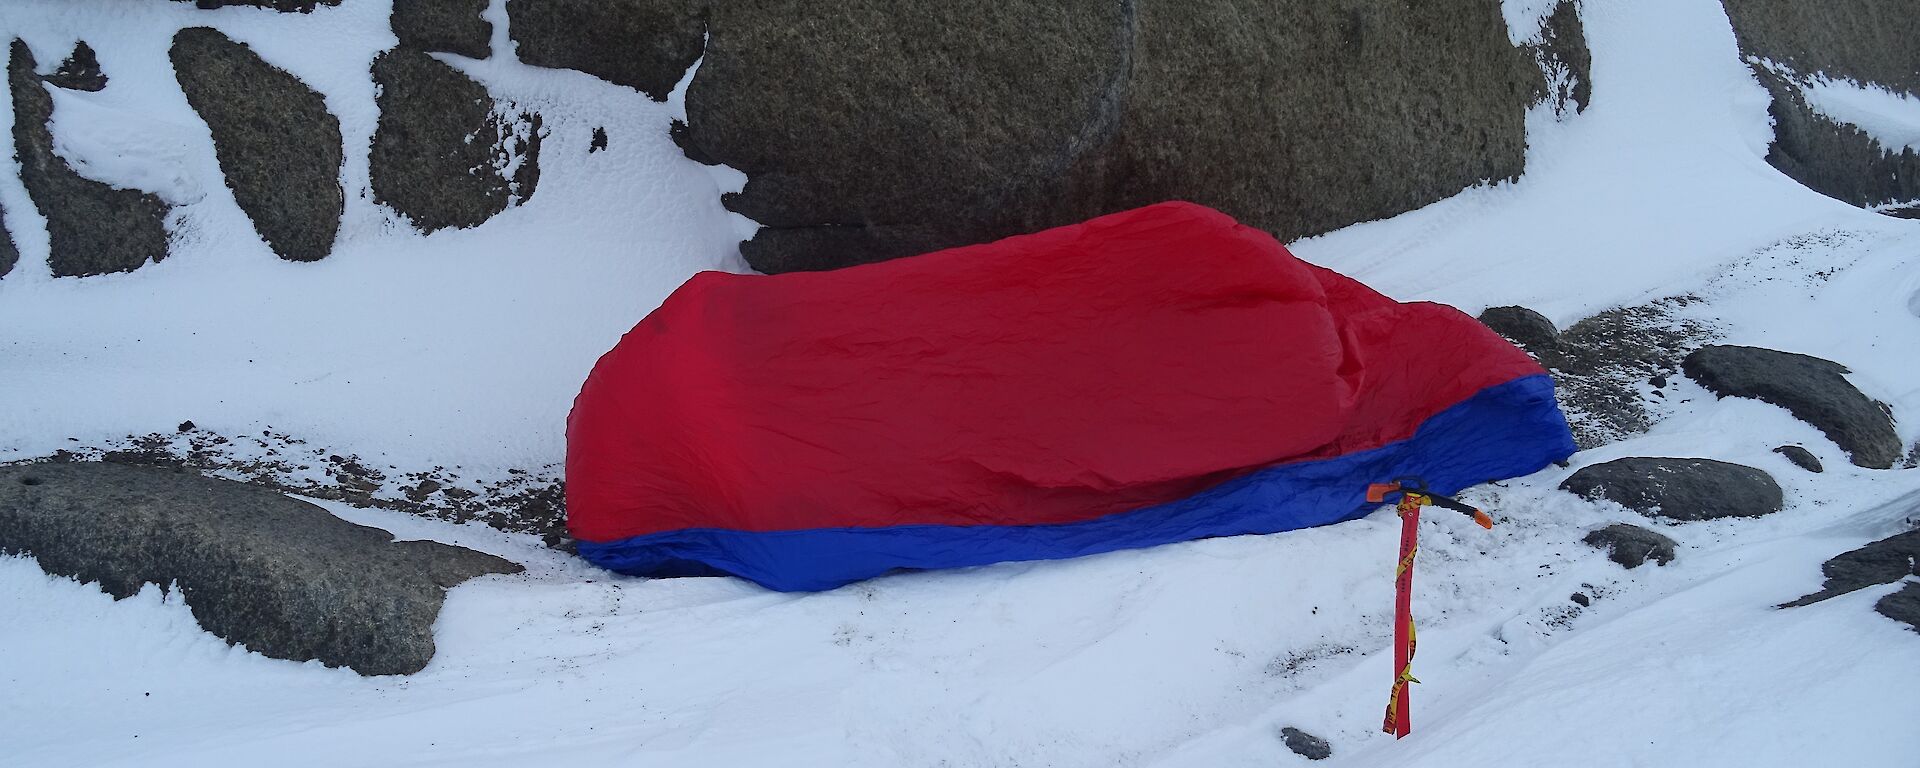 A red plastic bivvy bag next to a rocky embankment